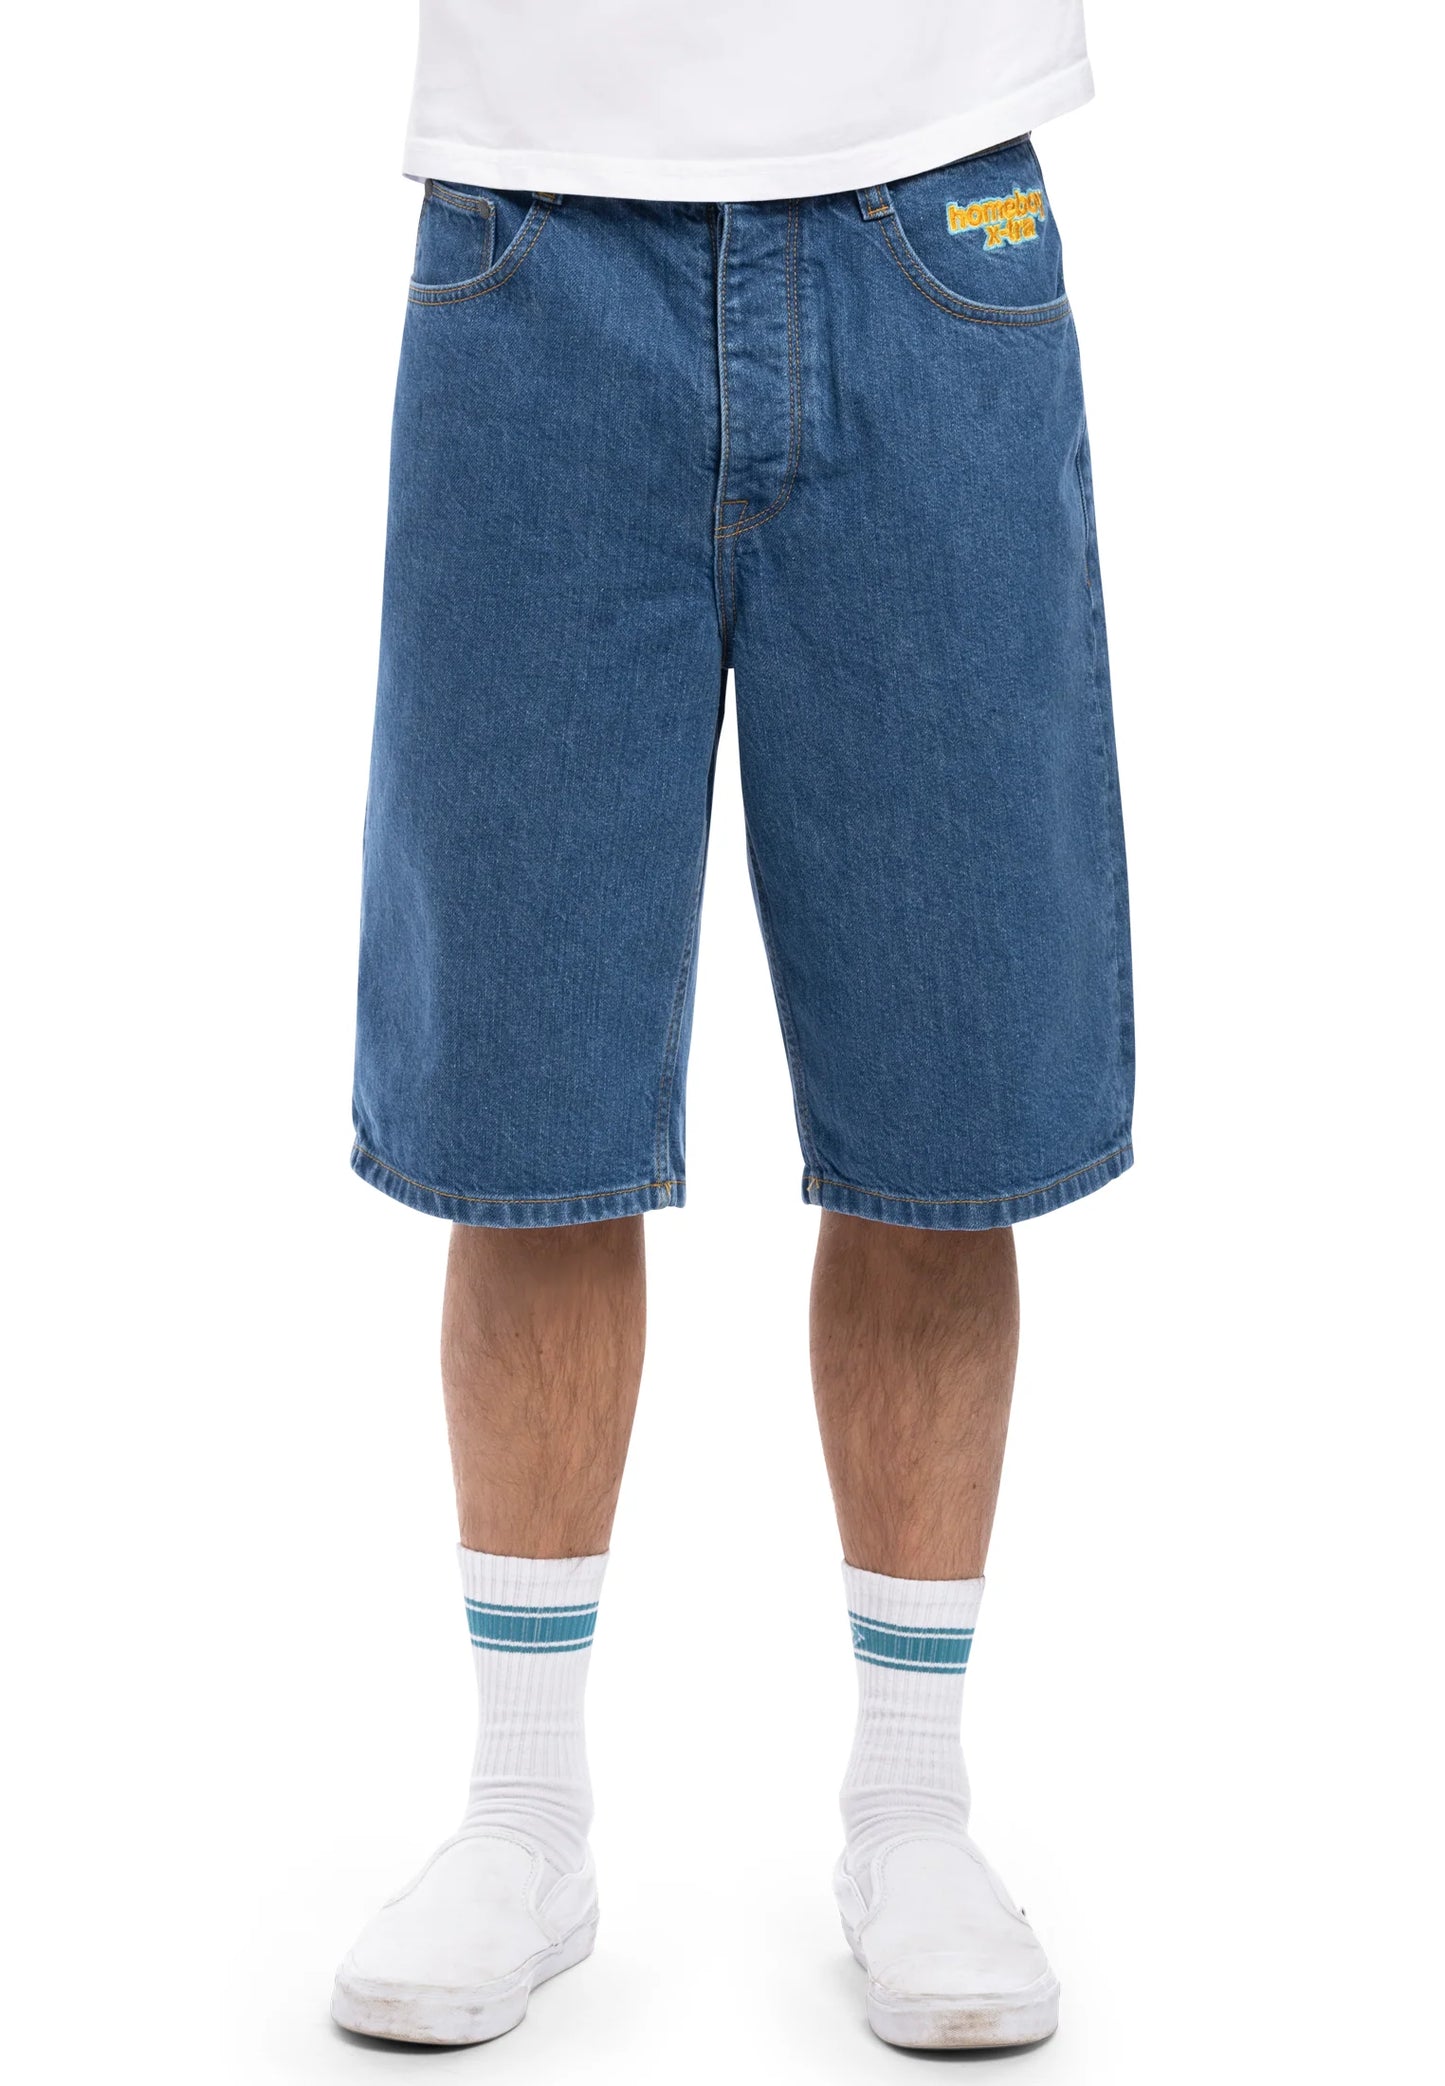 Baggy shorts